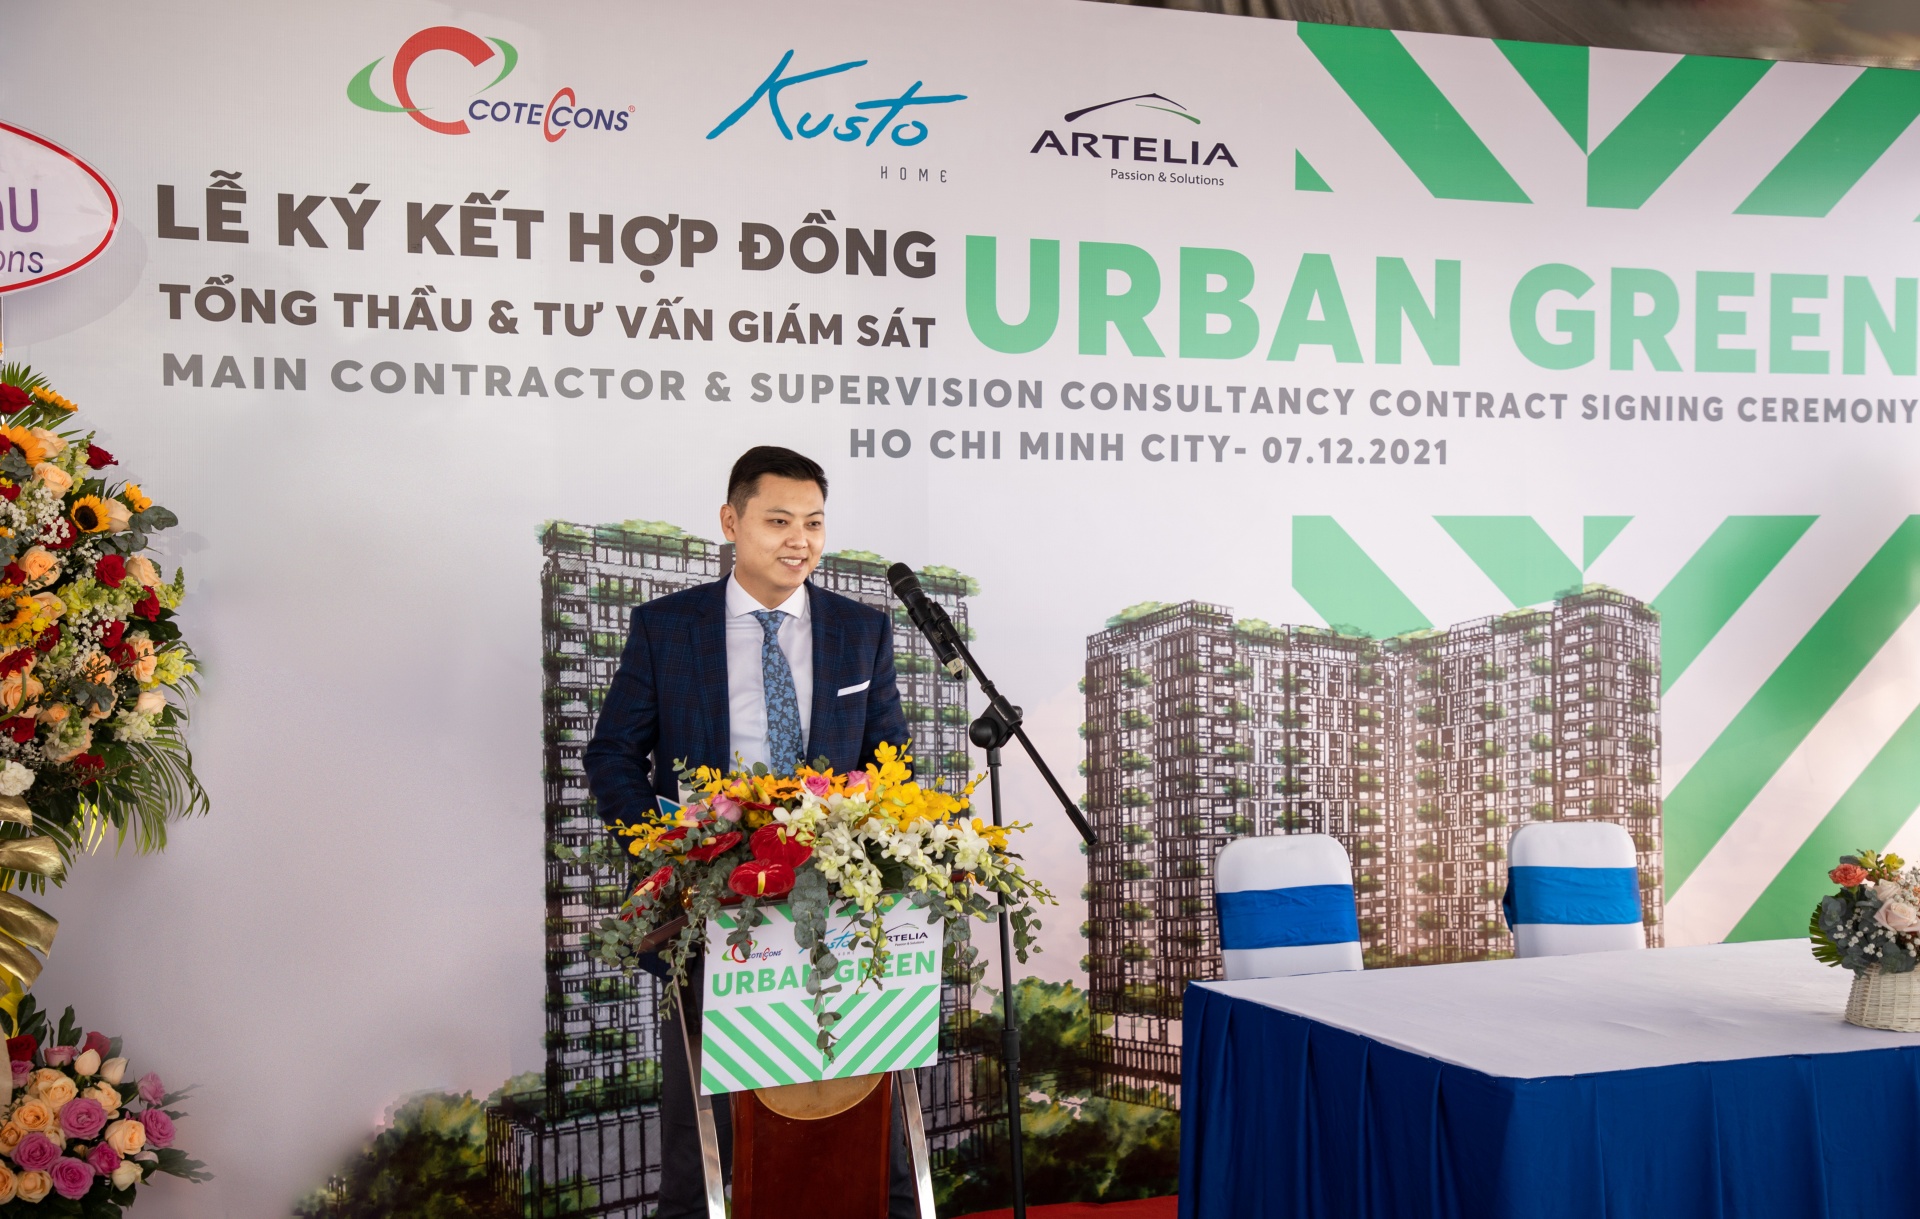 Kusto Home holds groundbreaking ceremony for Urban Green